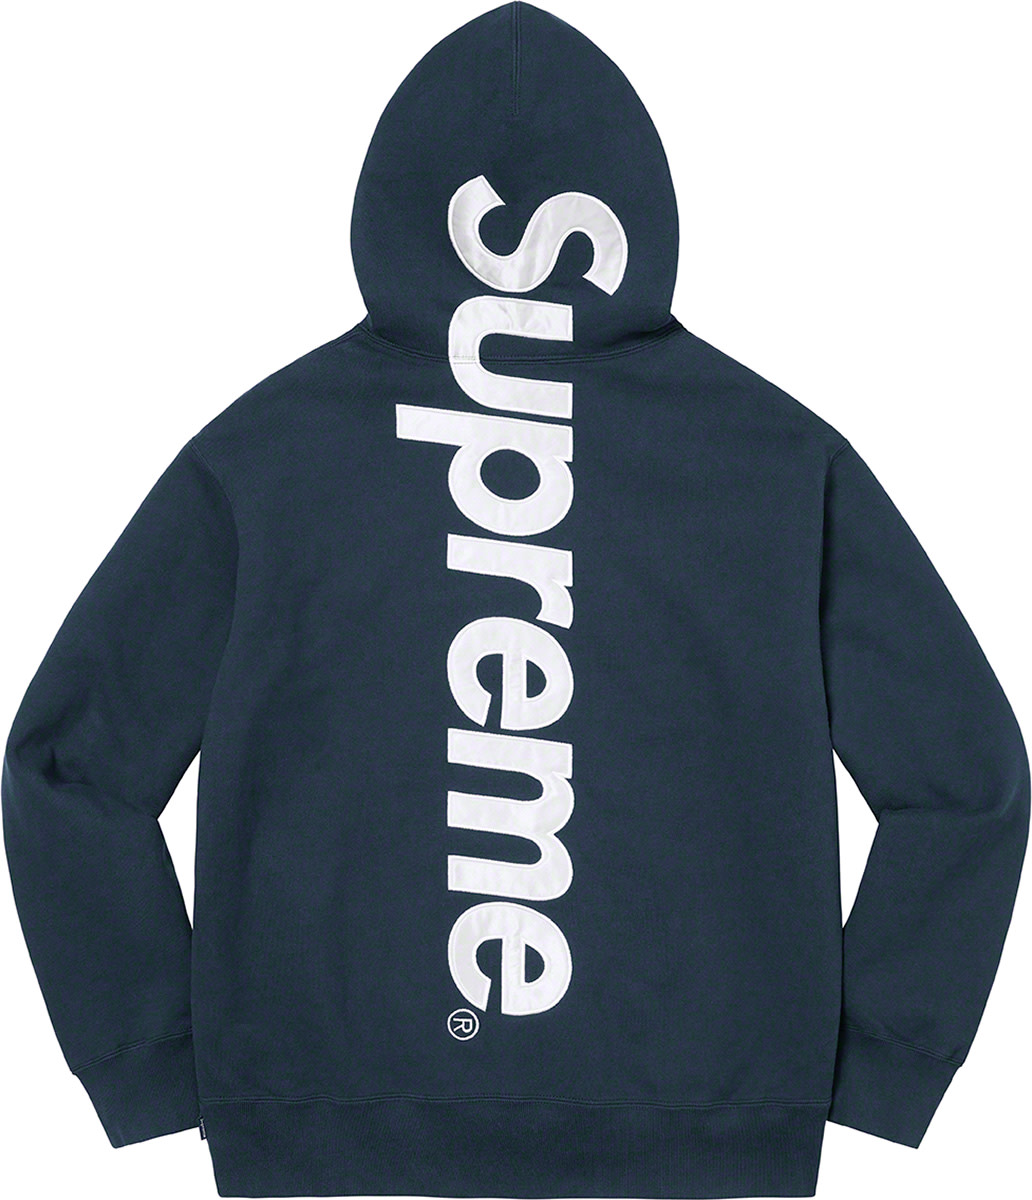 Supreme Satin Applique Hooded Sweatshirt